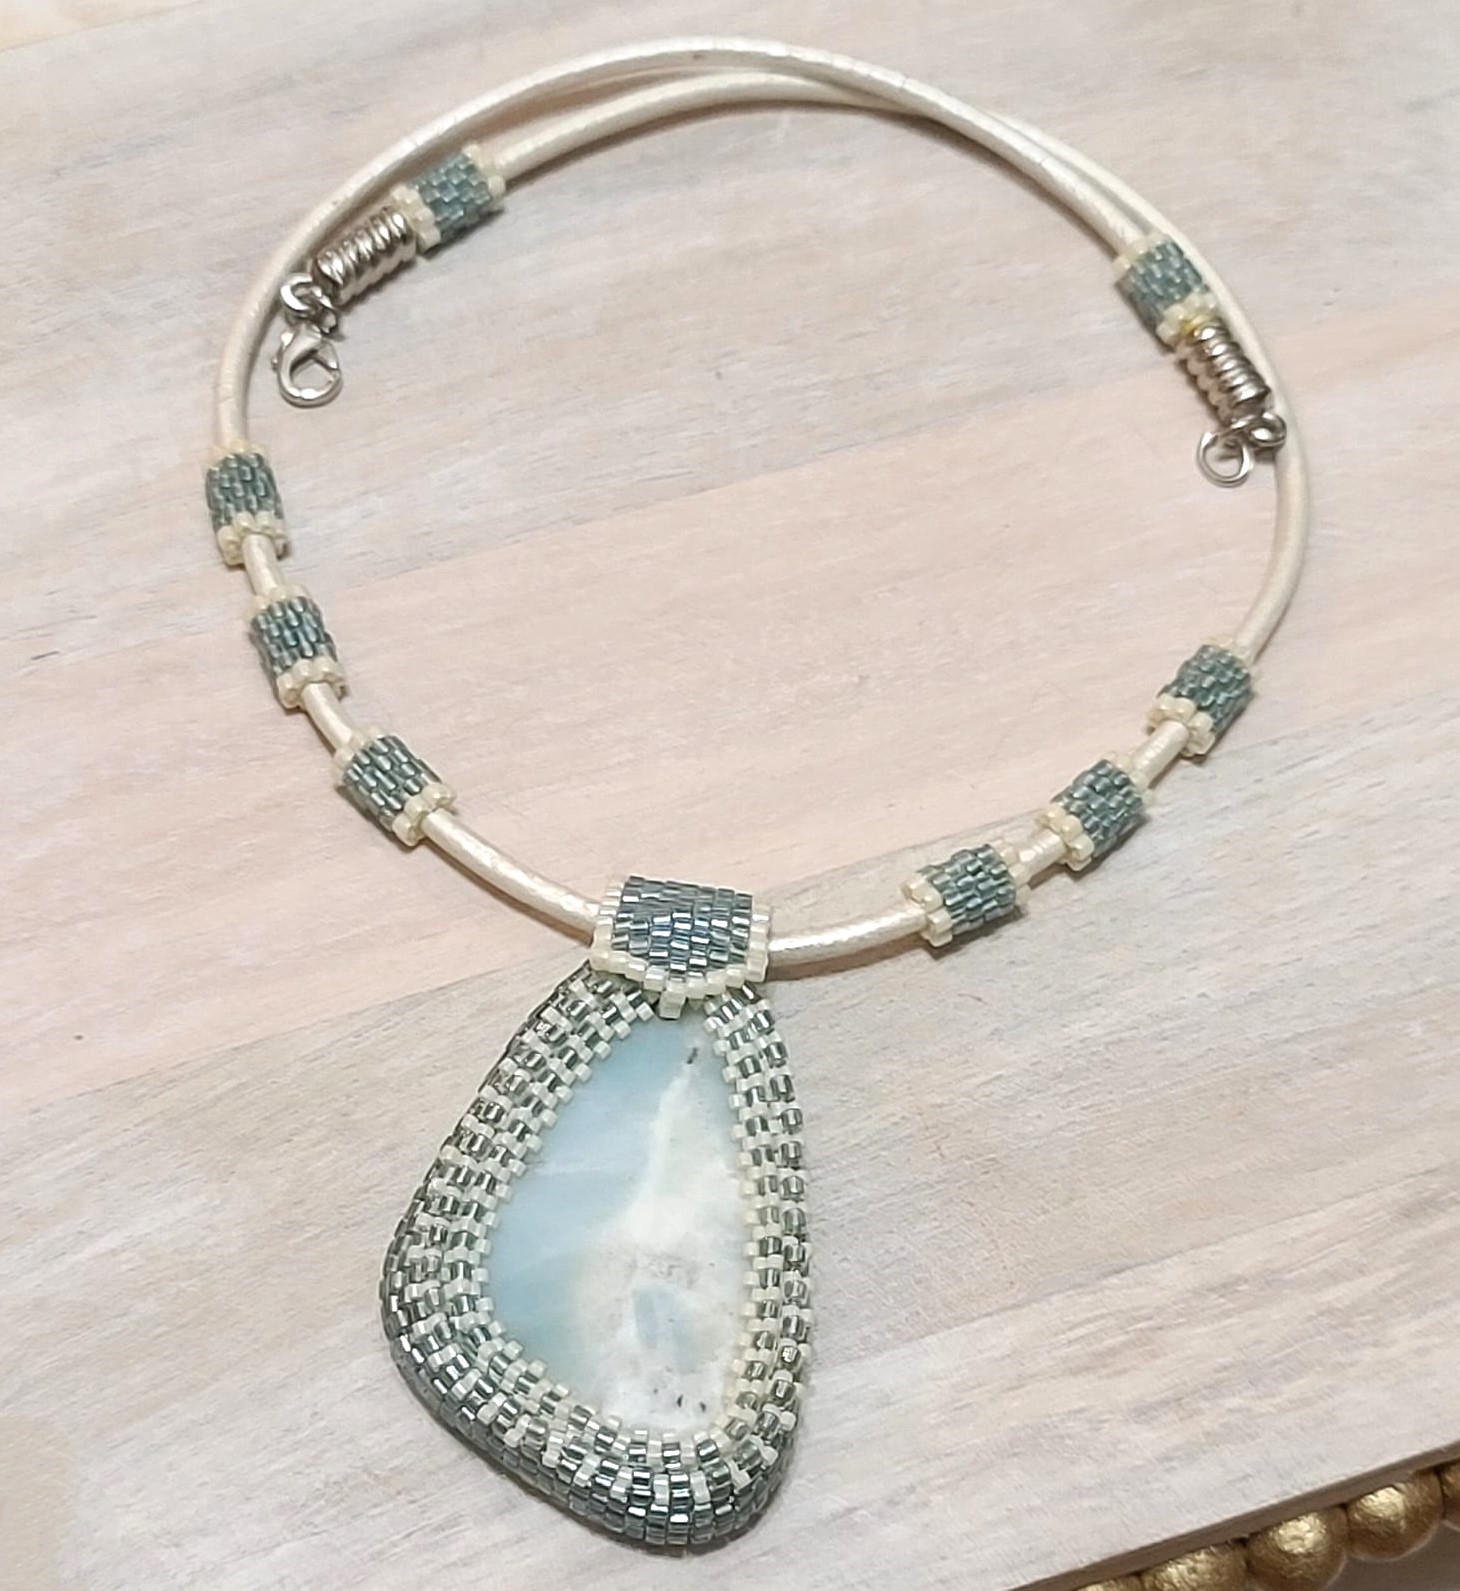 Amazonite gemstone pendant necklace with leather cord, miyuki glass, peyote stitch, handcrafted